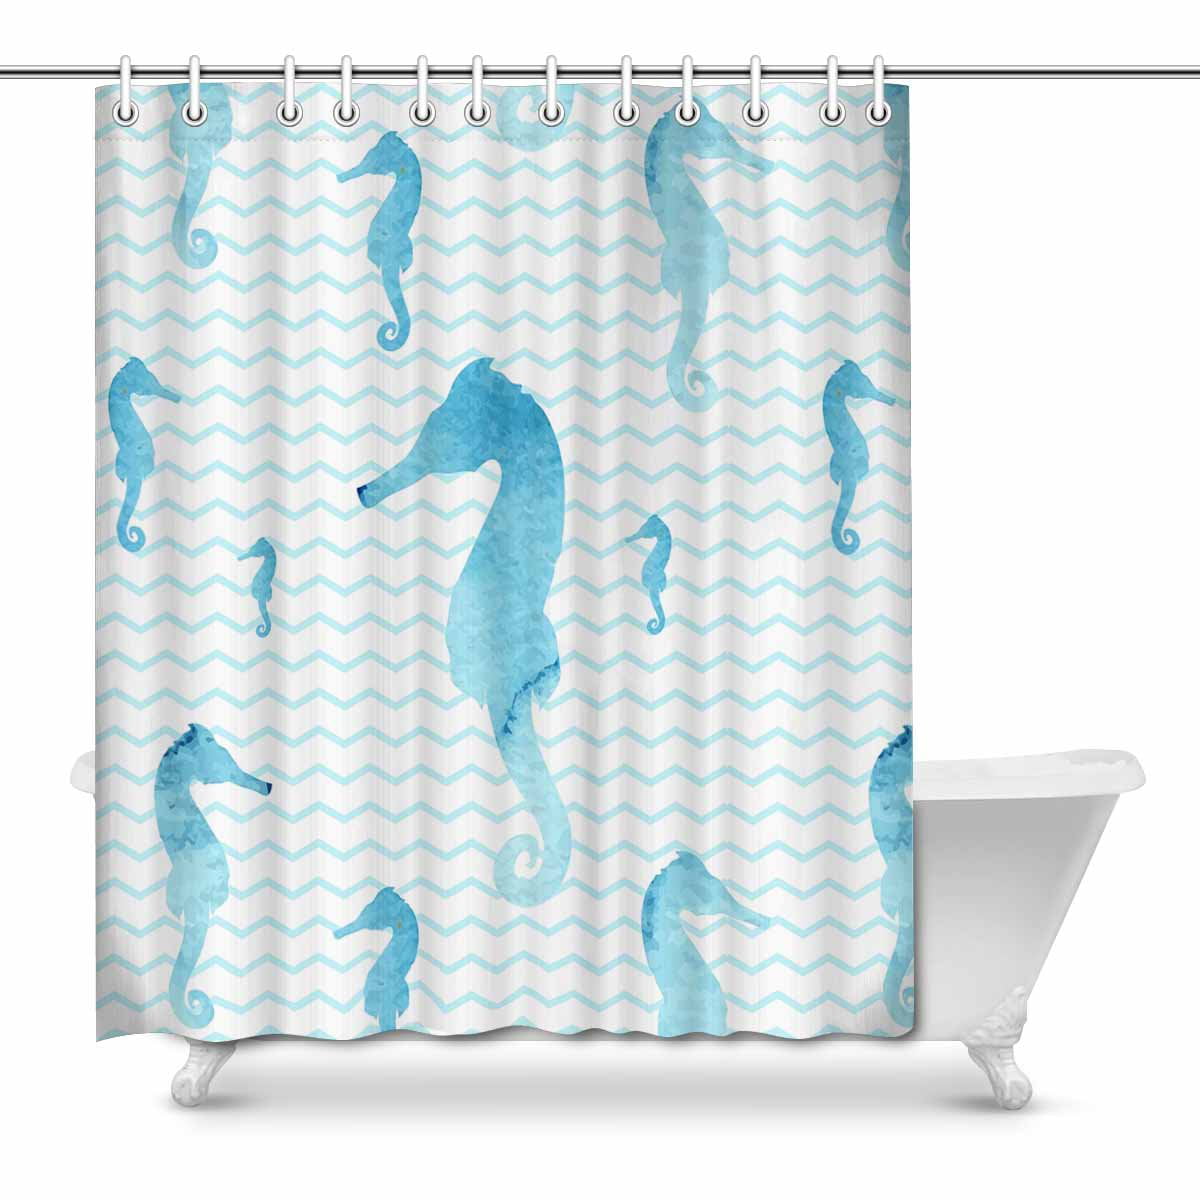 Seahorse Shower Curtain Ocean Animal Fabric Bathroom Decor with Hooks 72x72 in 